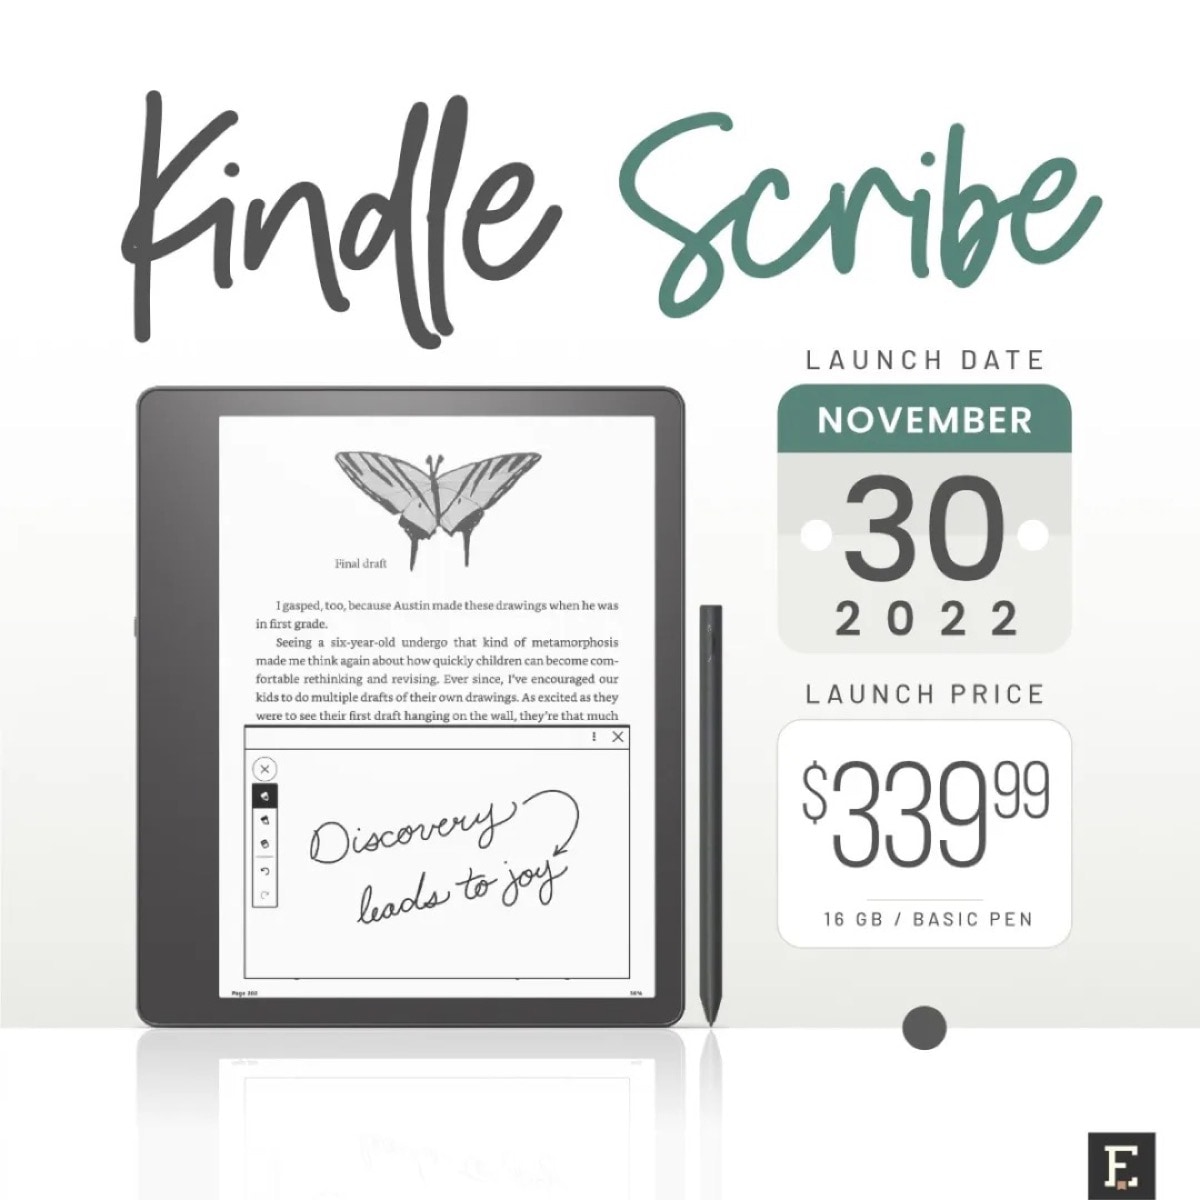 Kindle Scribe 1 Black Friday 2022 price